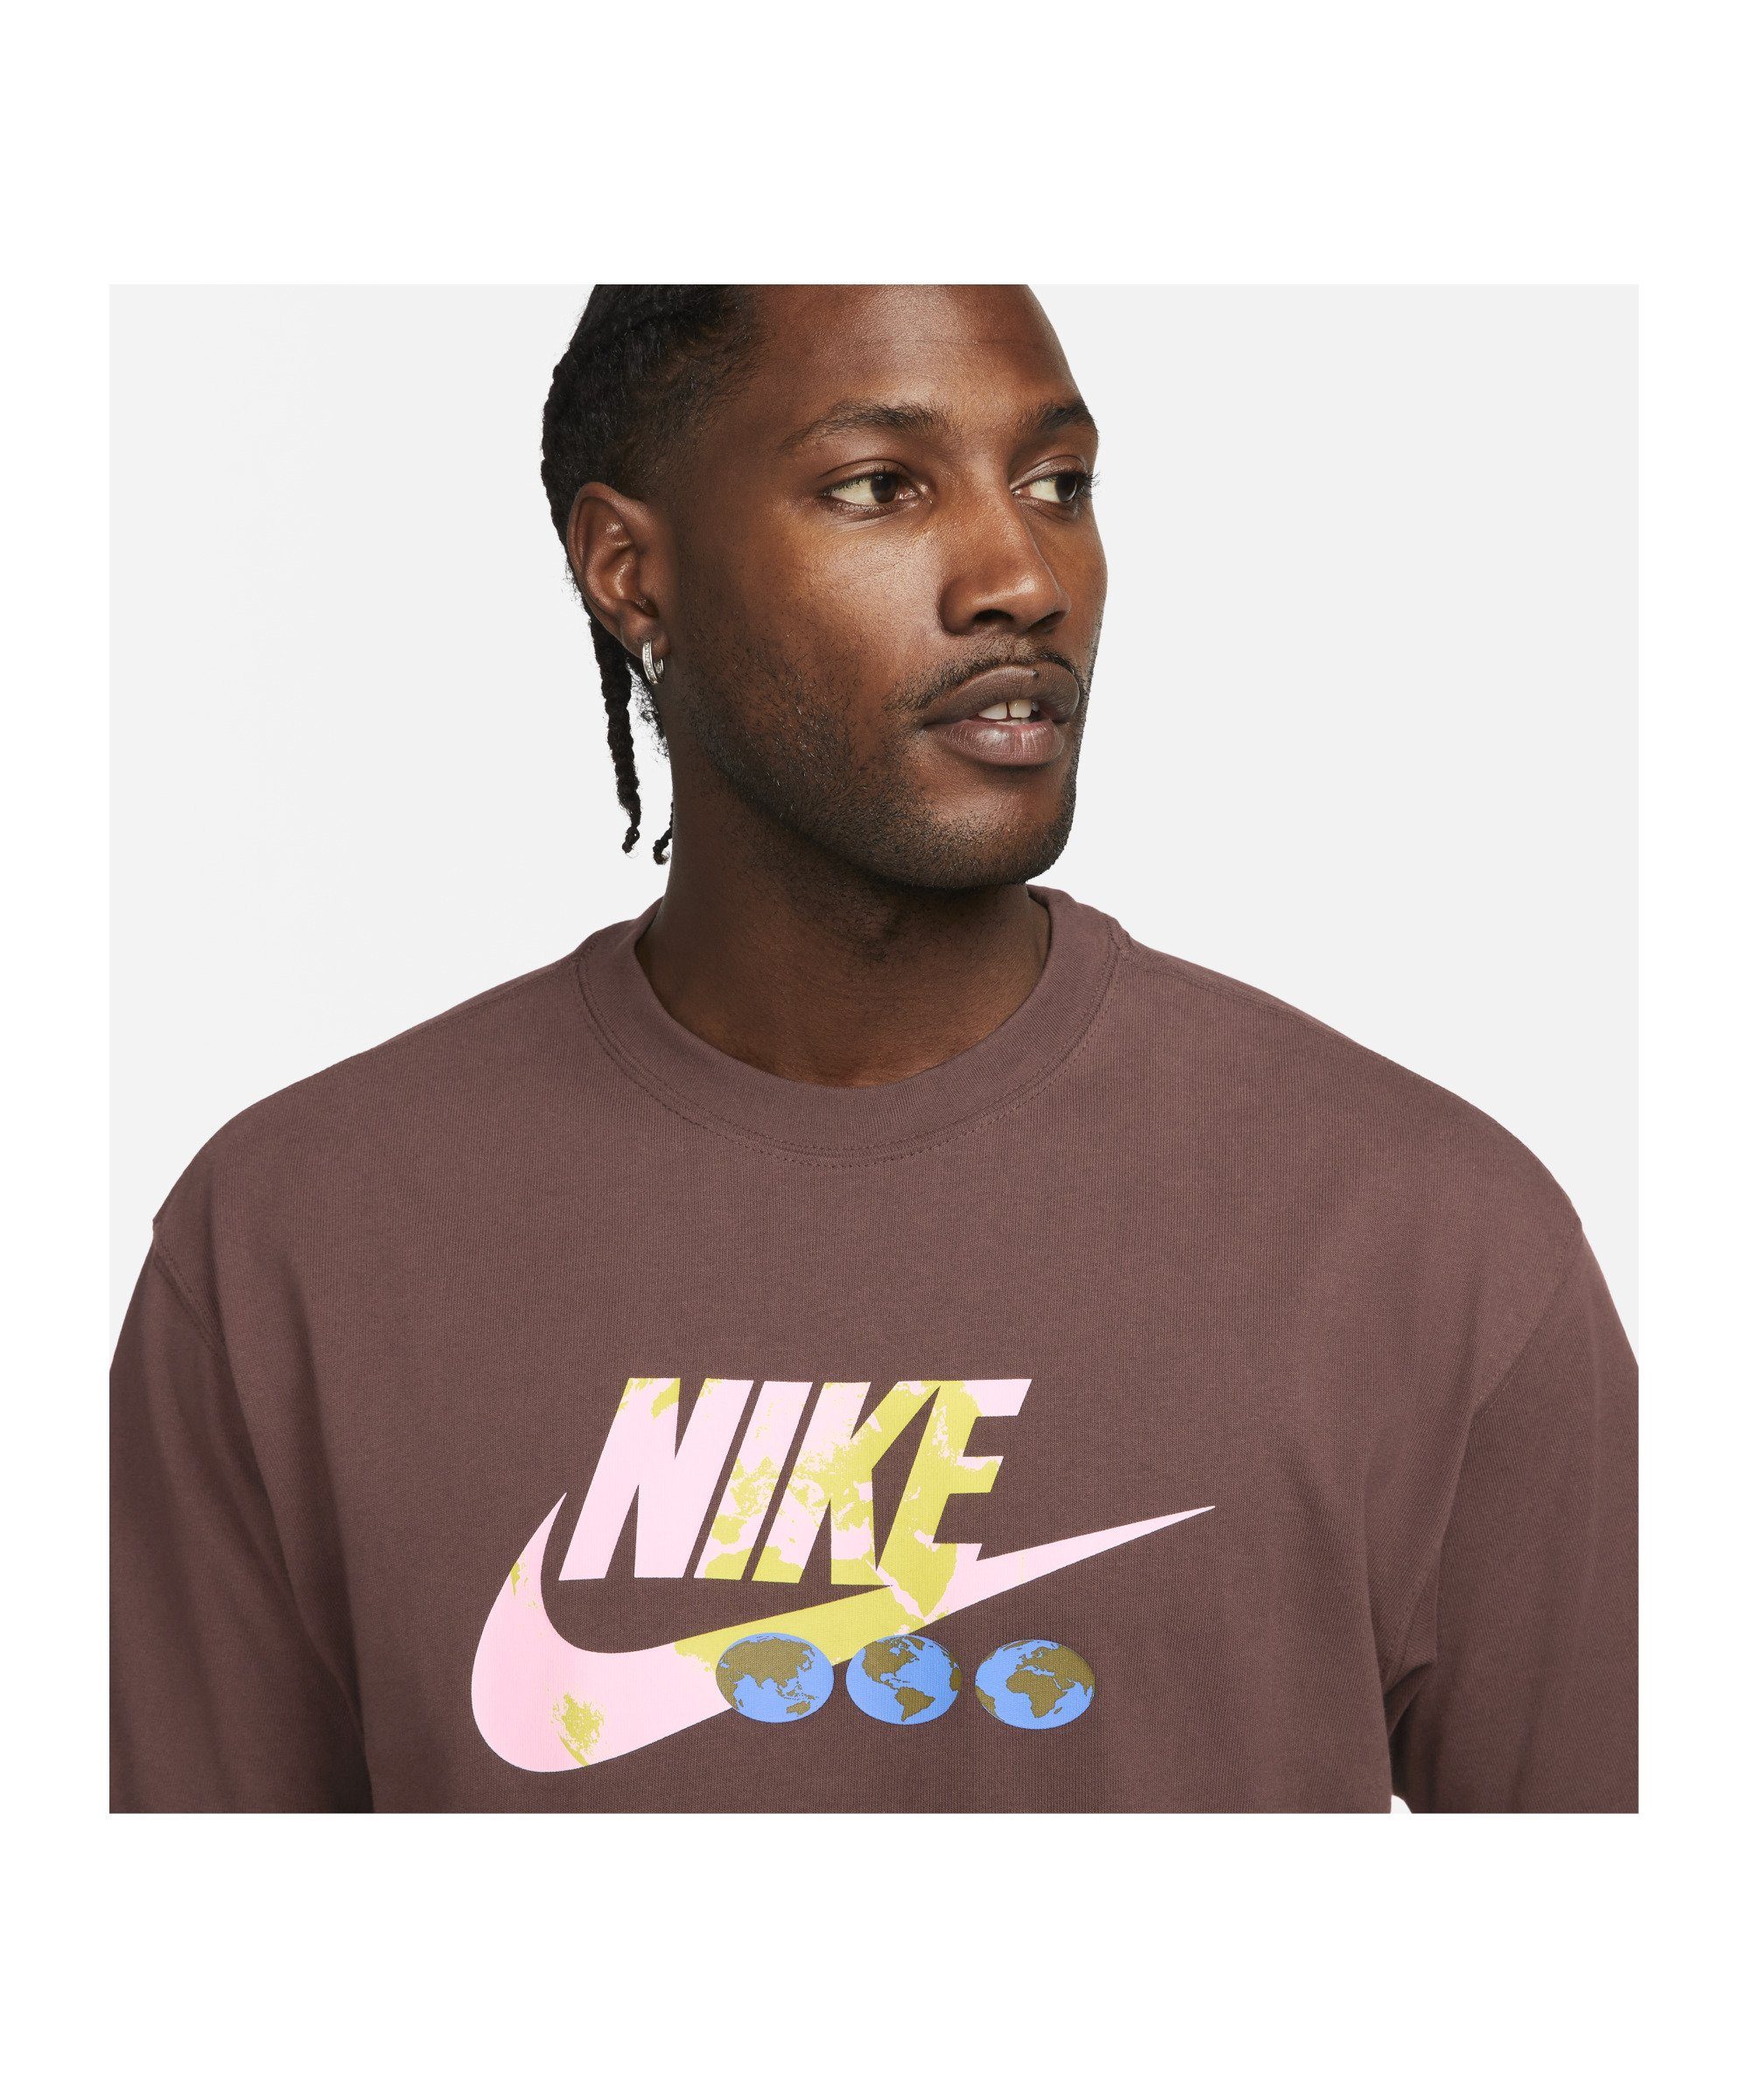 Beige T-Shirt Nike braun T-Shirt default Sportswear